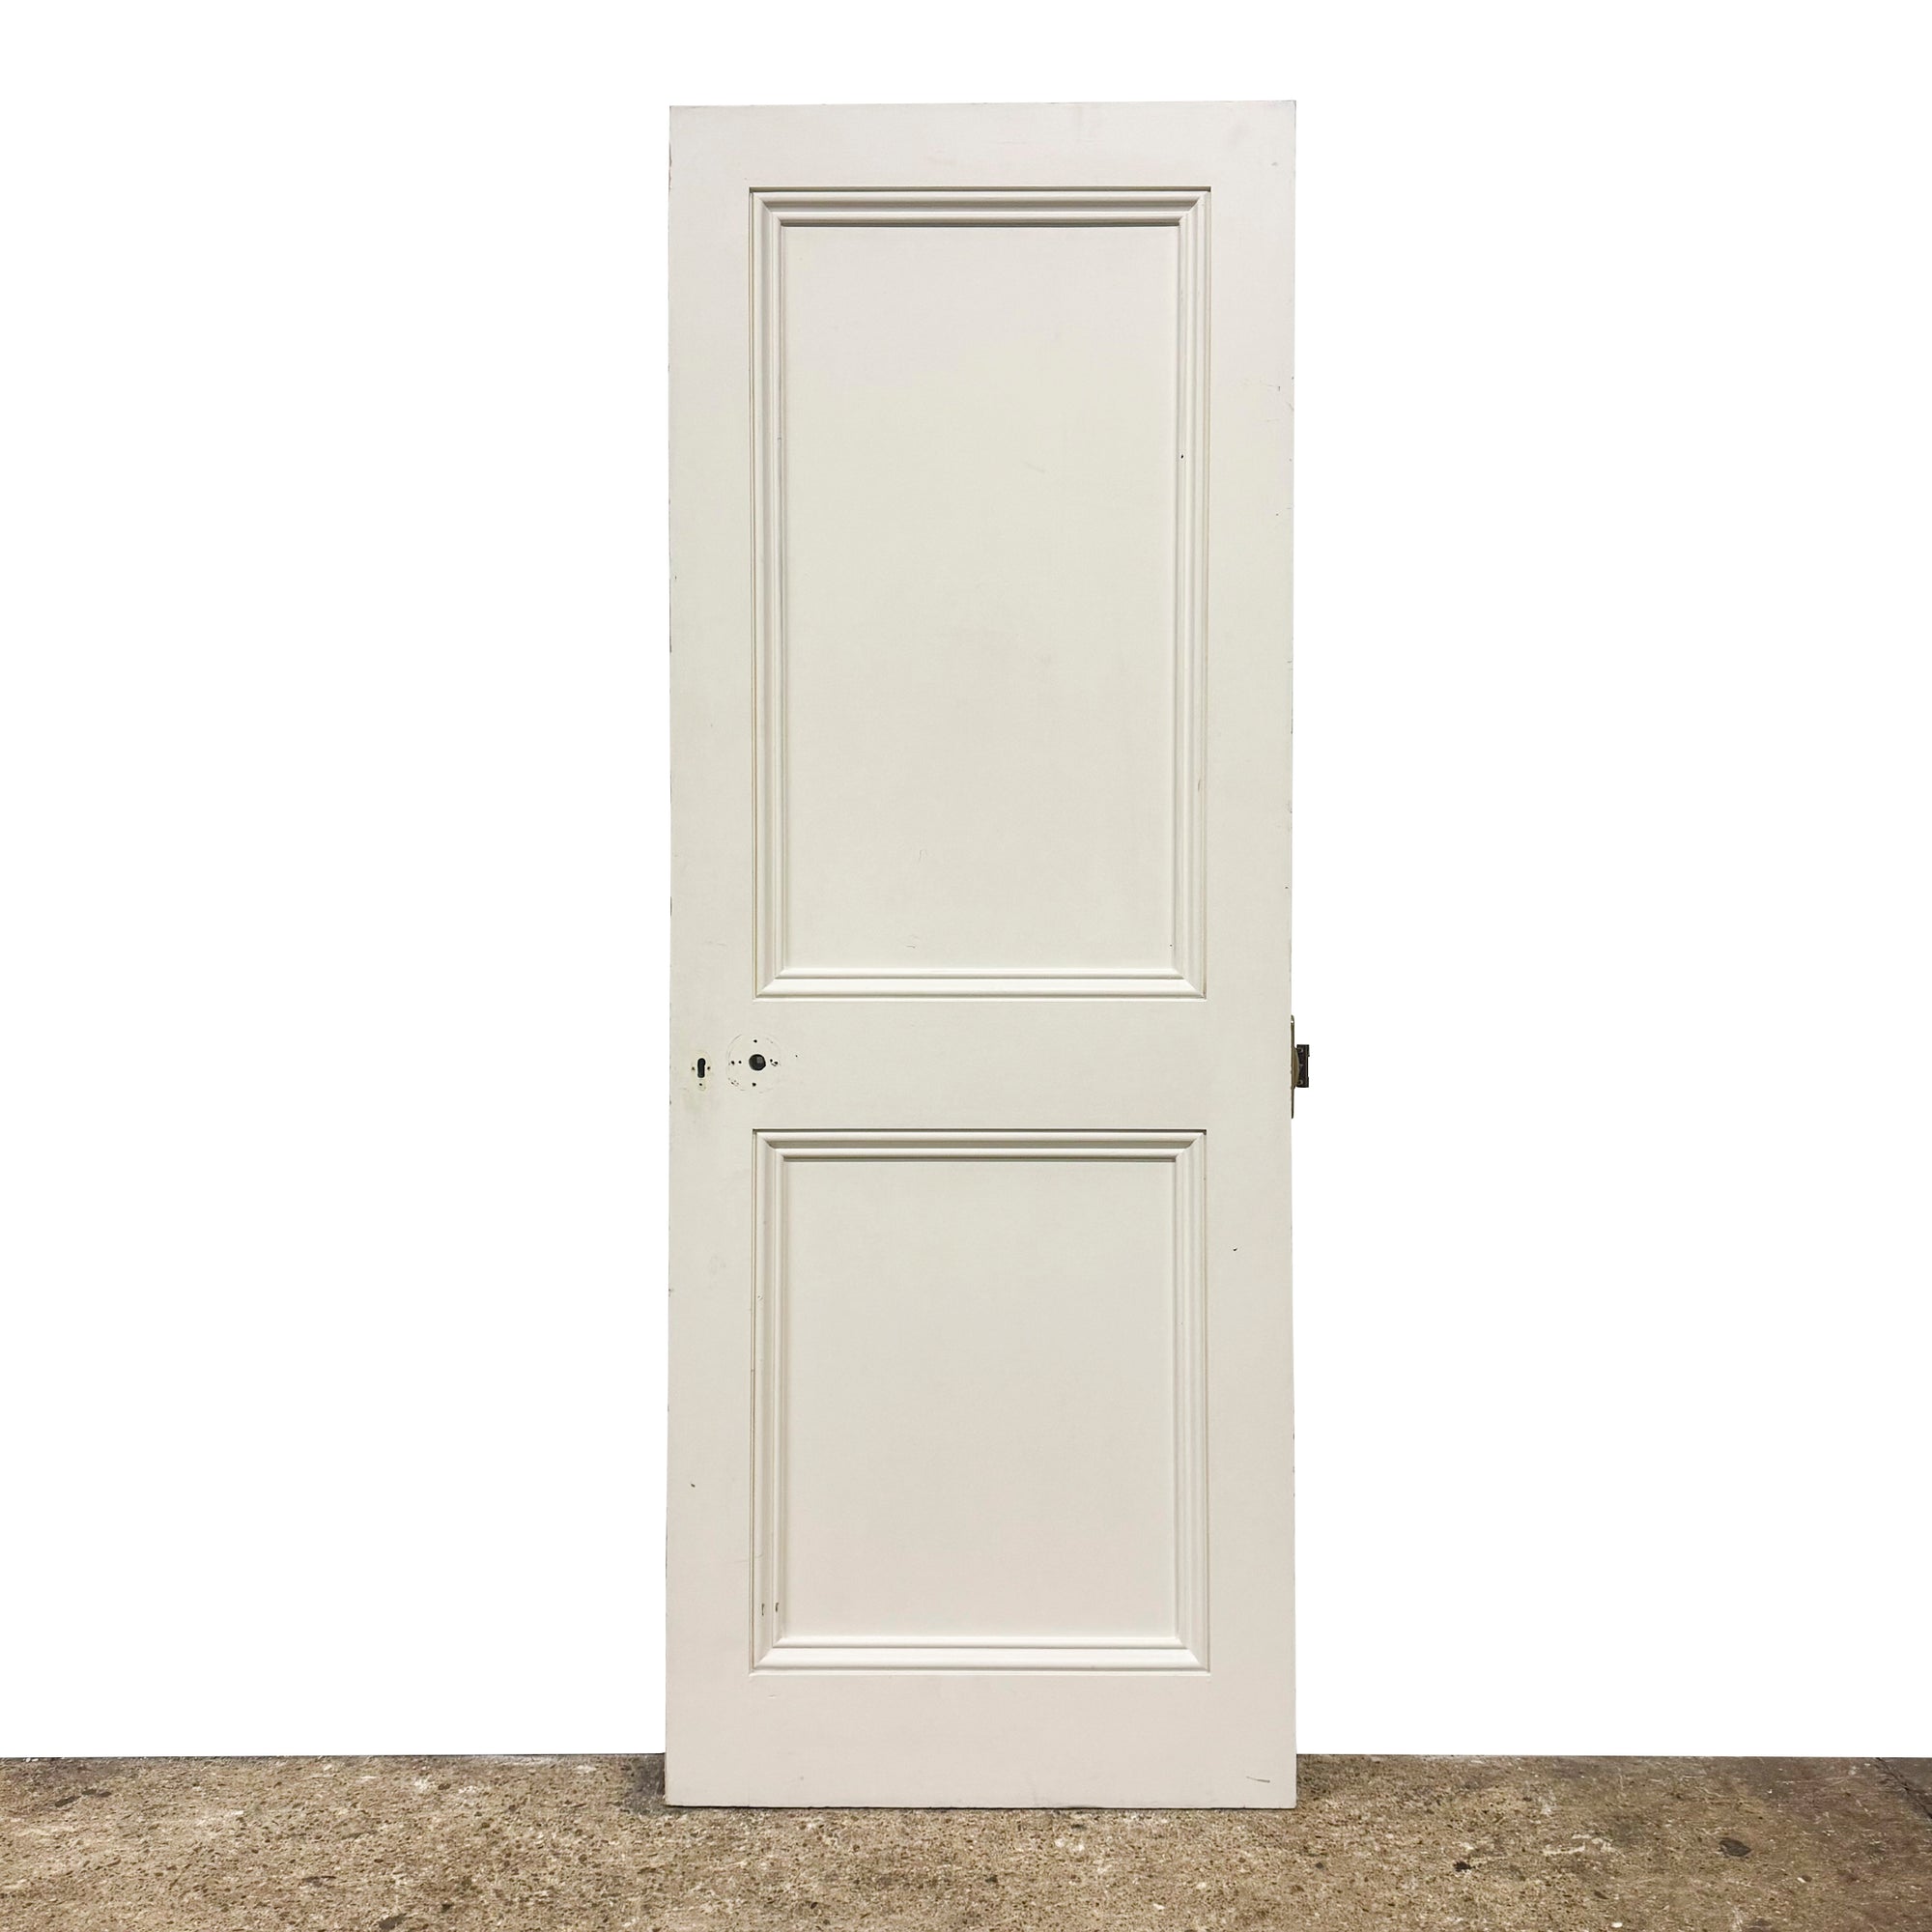 Reclaimed White Tulip Wood 2 Panel Door - 196cm x 72.5cm | The Architectural Forum